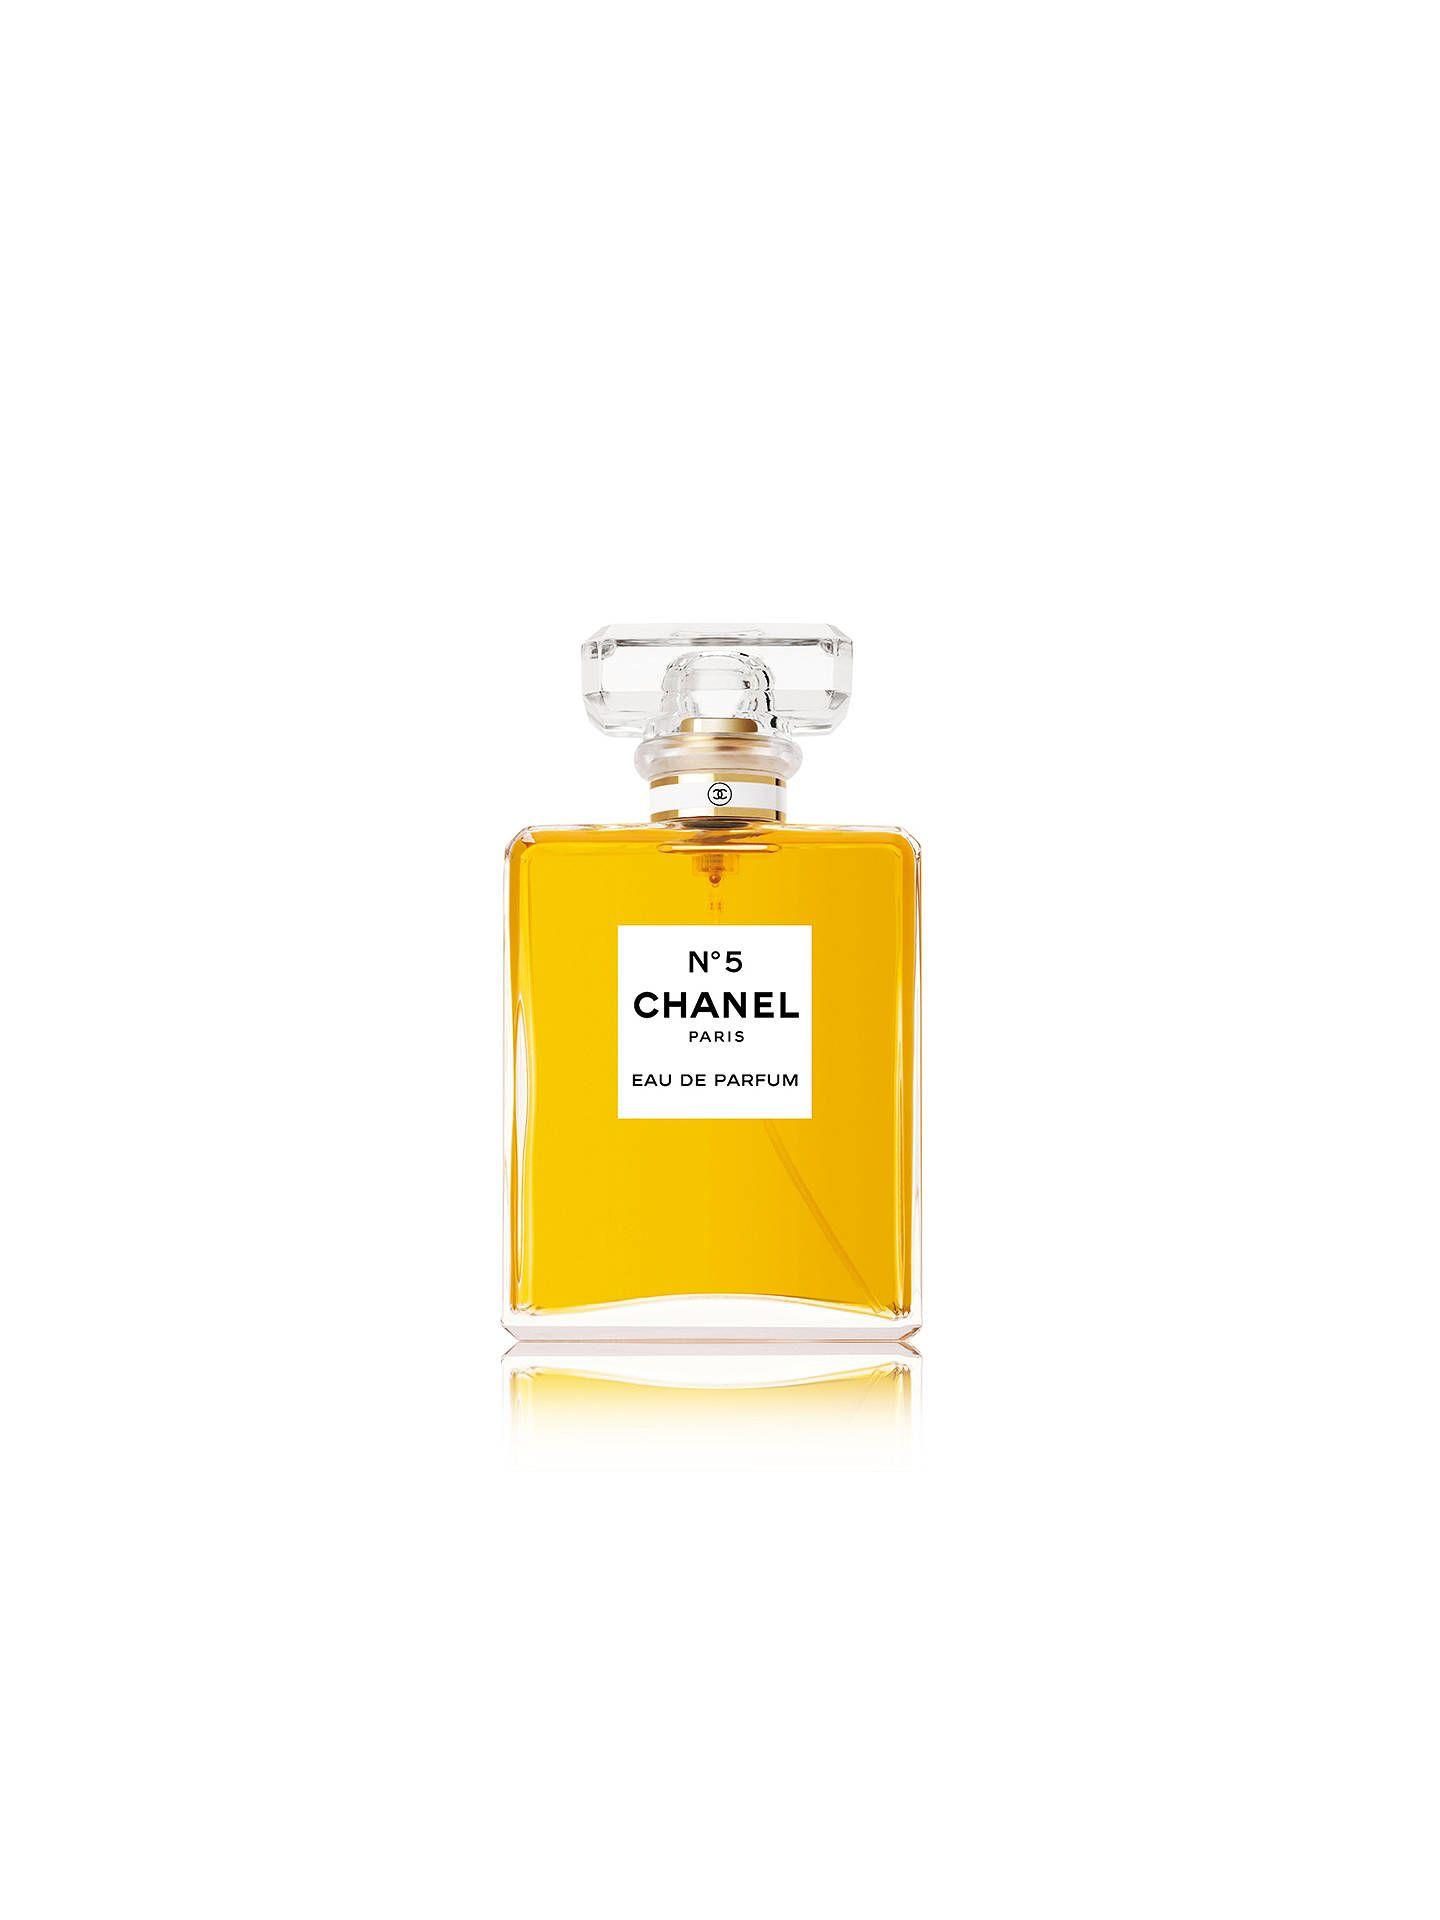 Chanel No. 5 Perfume Logo - CHANEL N°5 Eau de Parfum Spray at John Lewis & Partners